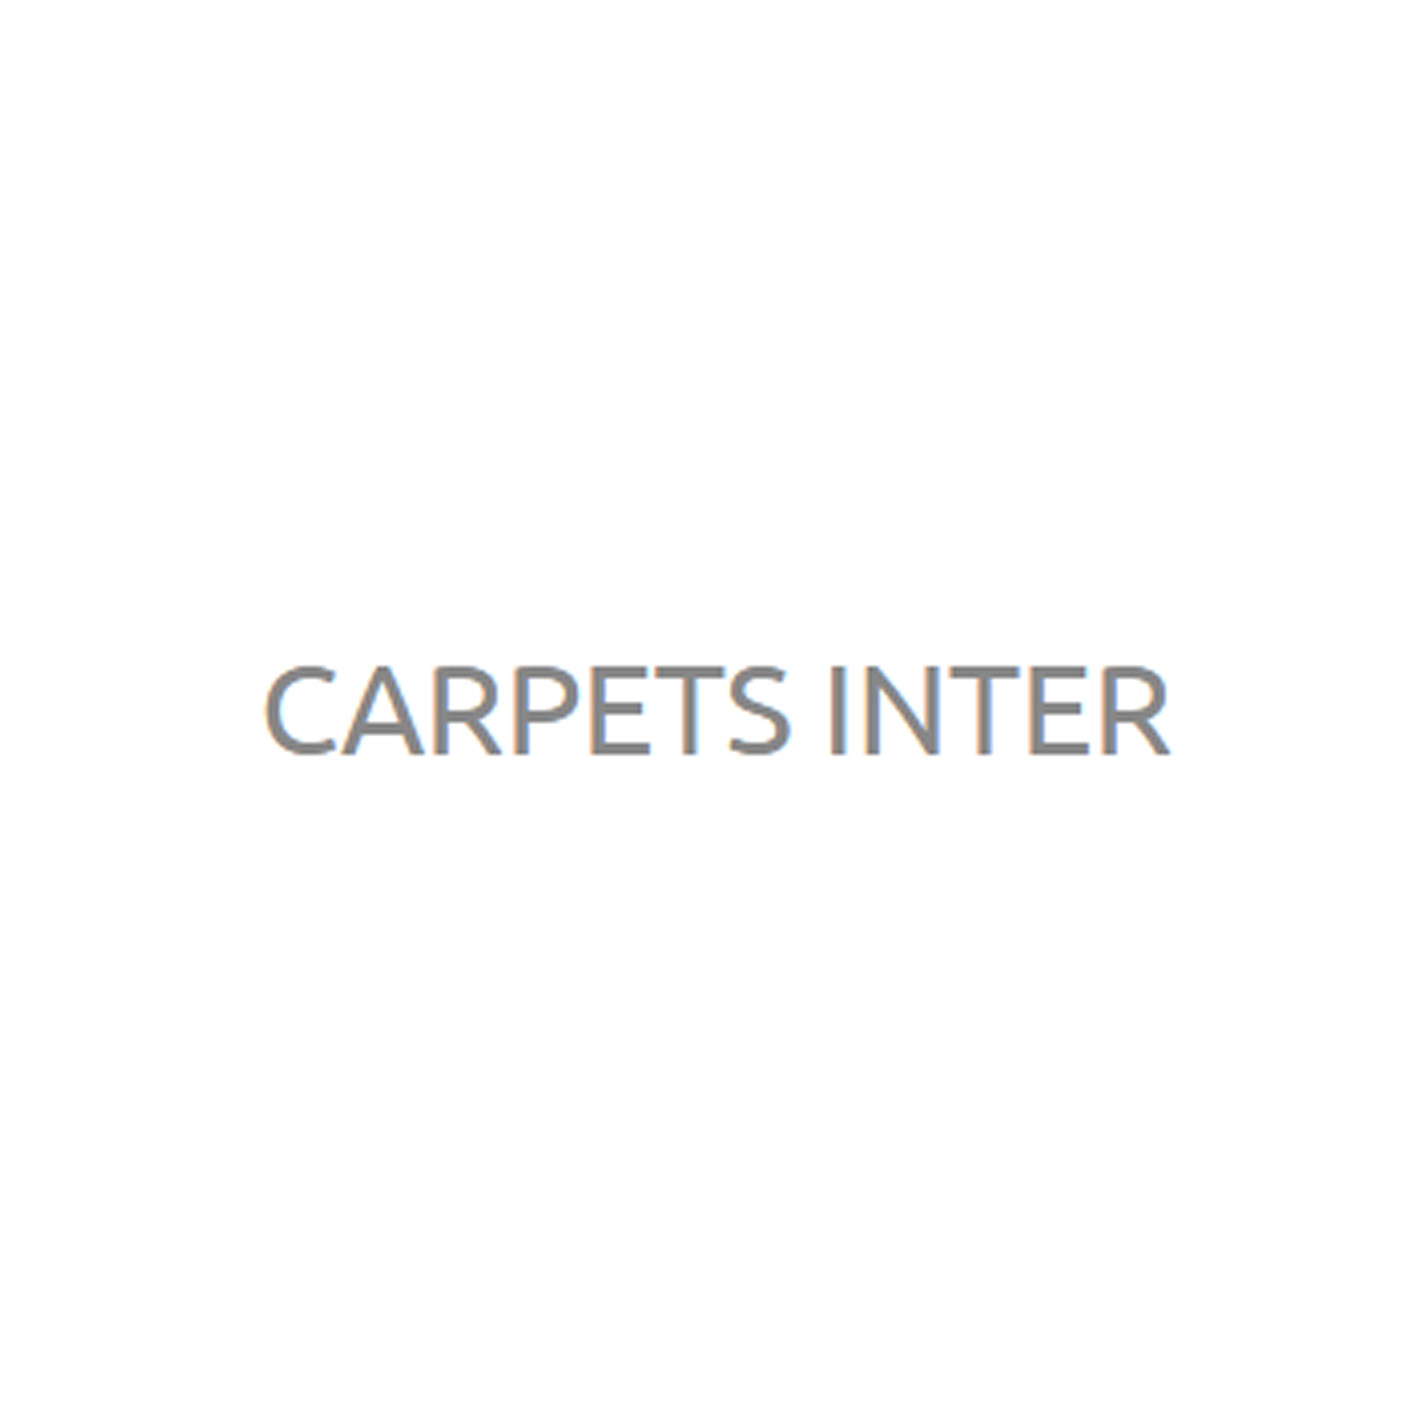 Carpets Inter